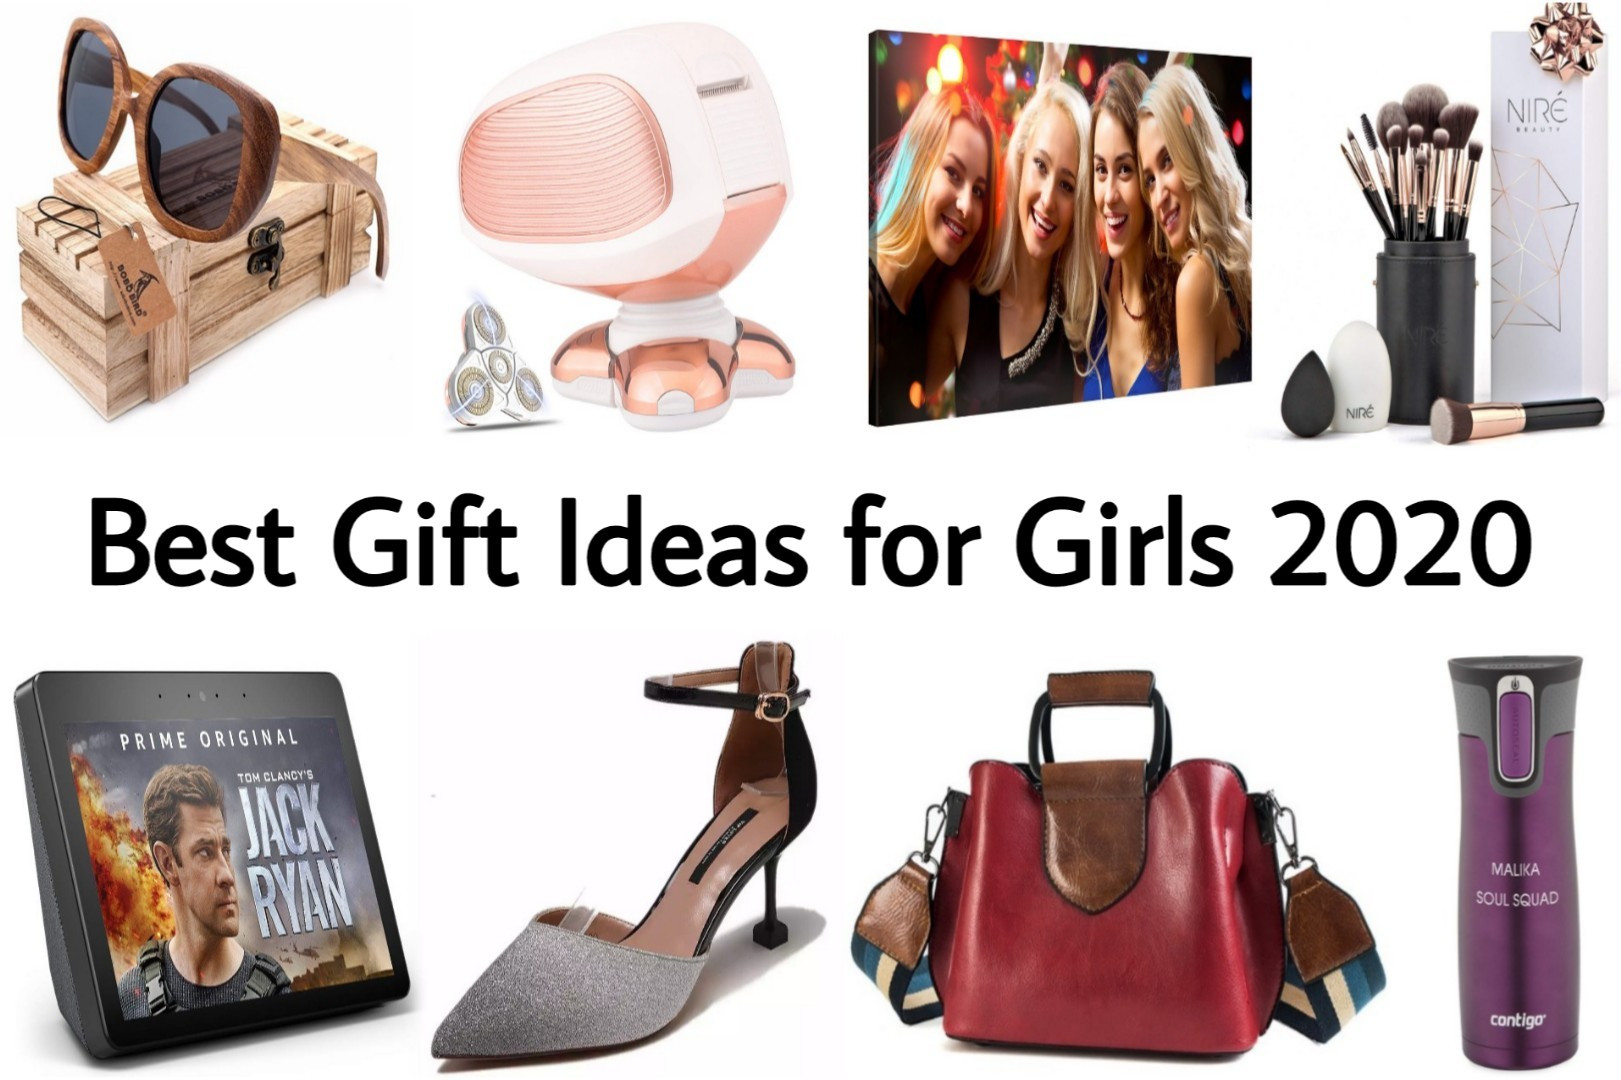 Girlfriend Gift Ideas 2020
 Best Christmas Gifts For Girlfriend 2020